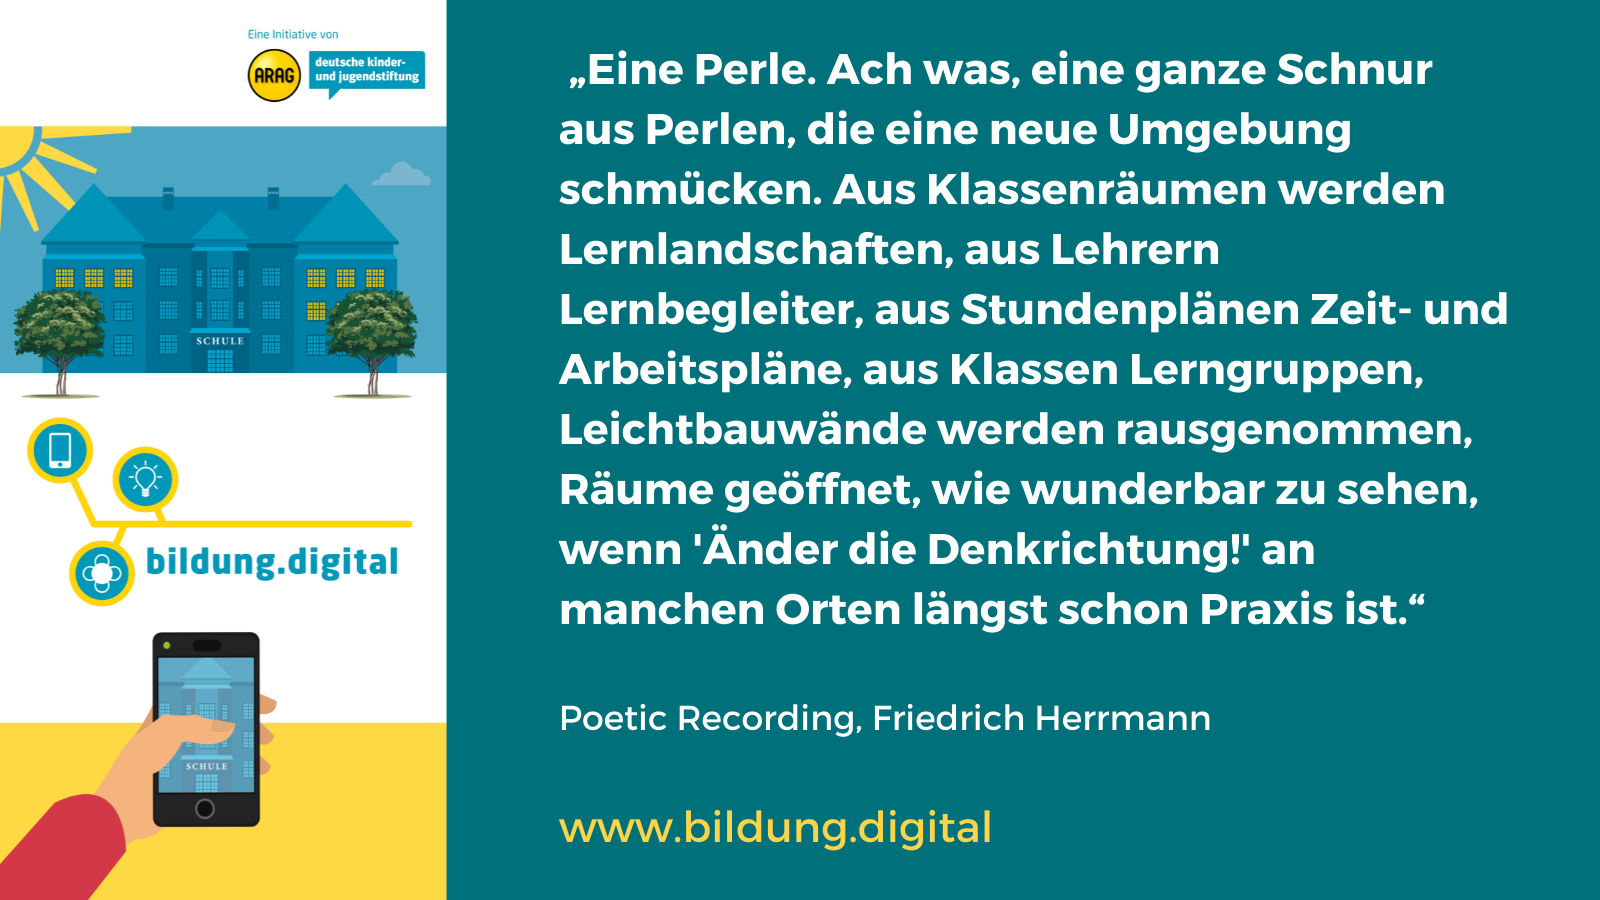 Poetic Recording Friedrich Hermann